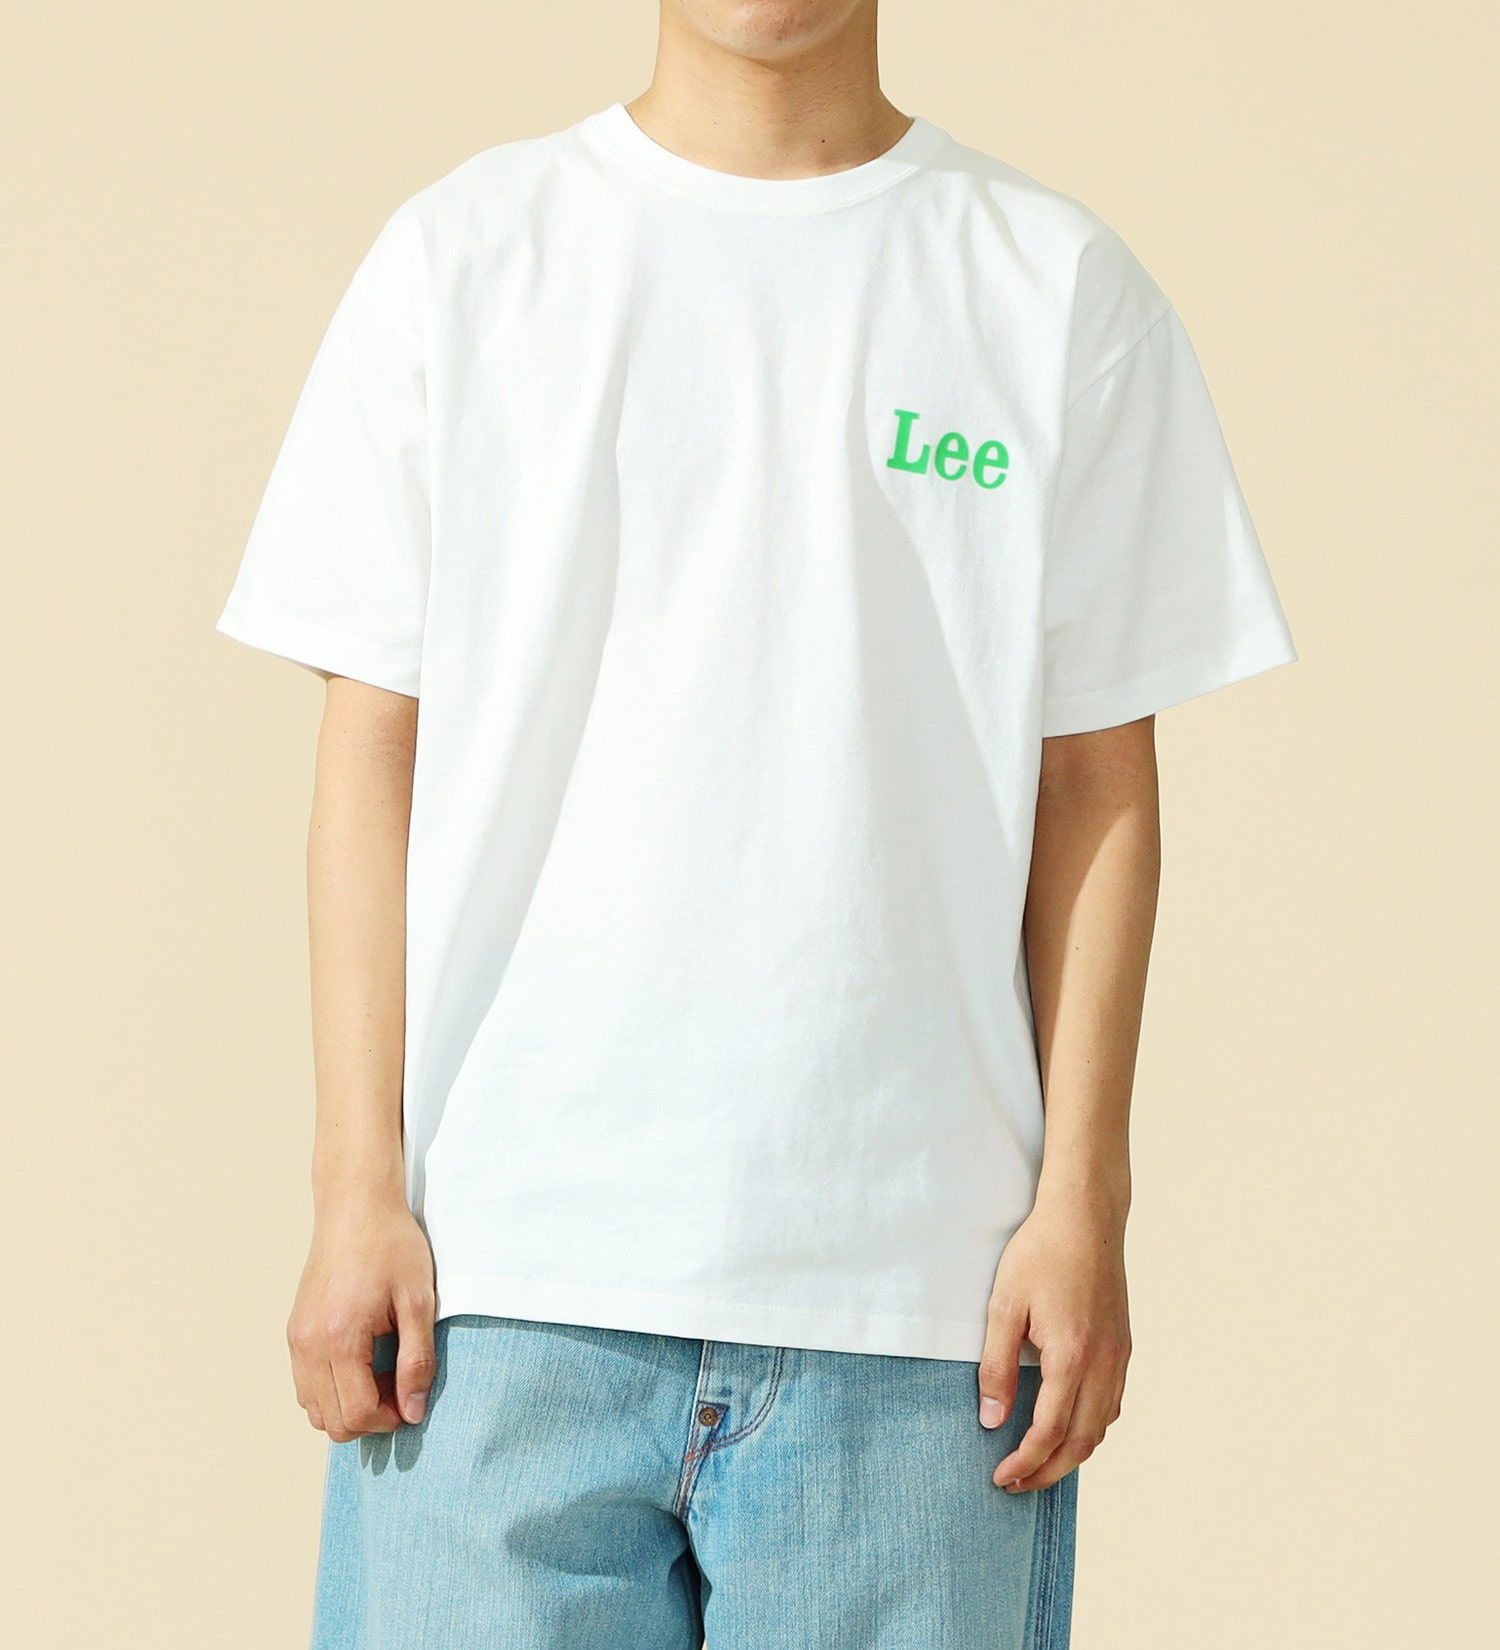 Lee(リー)のブルドッグ フロッキープリント ショートスリーブTee|トップス/Tシャツ/カットソー/メンズ|ホワイト